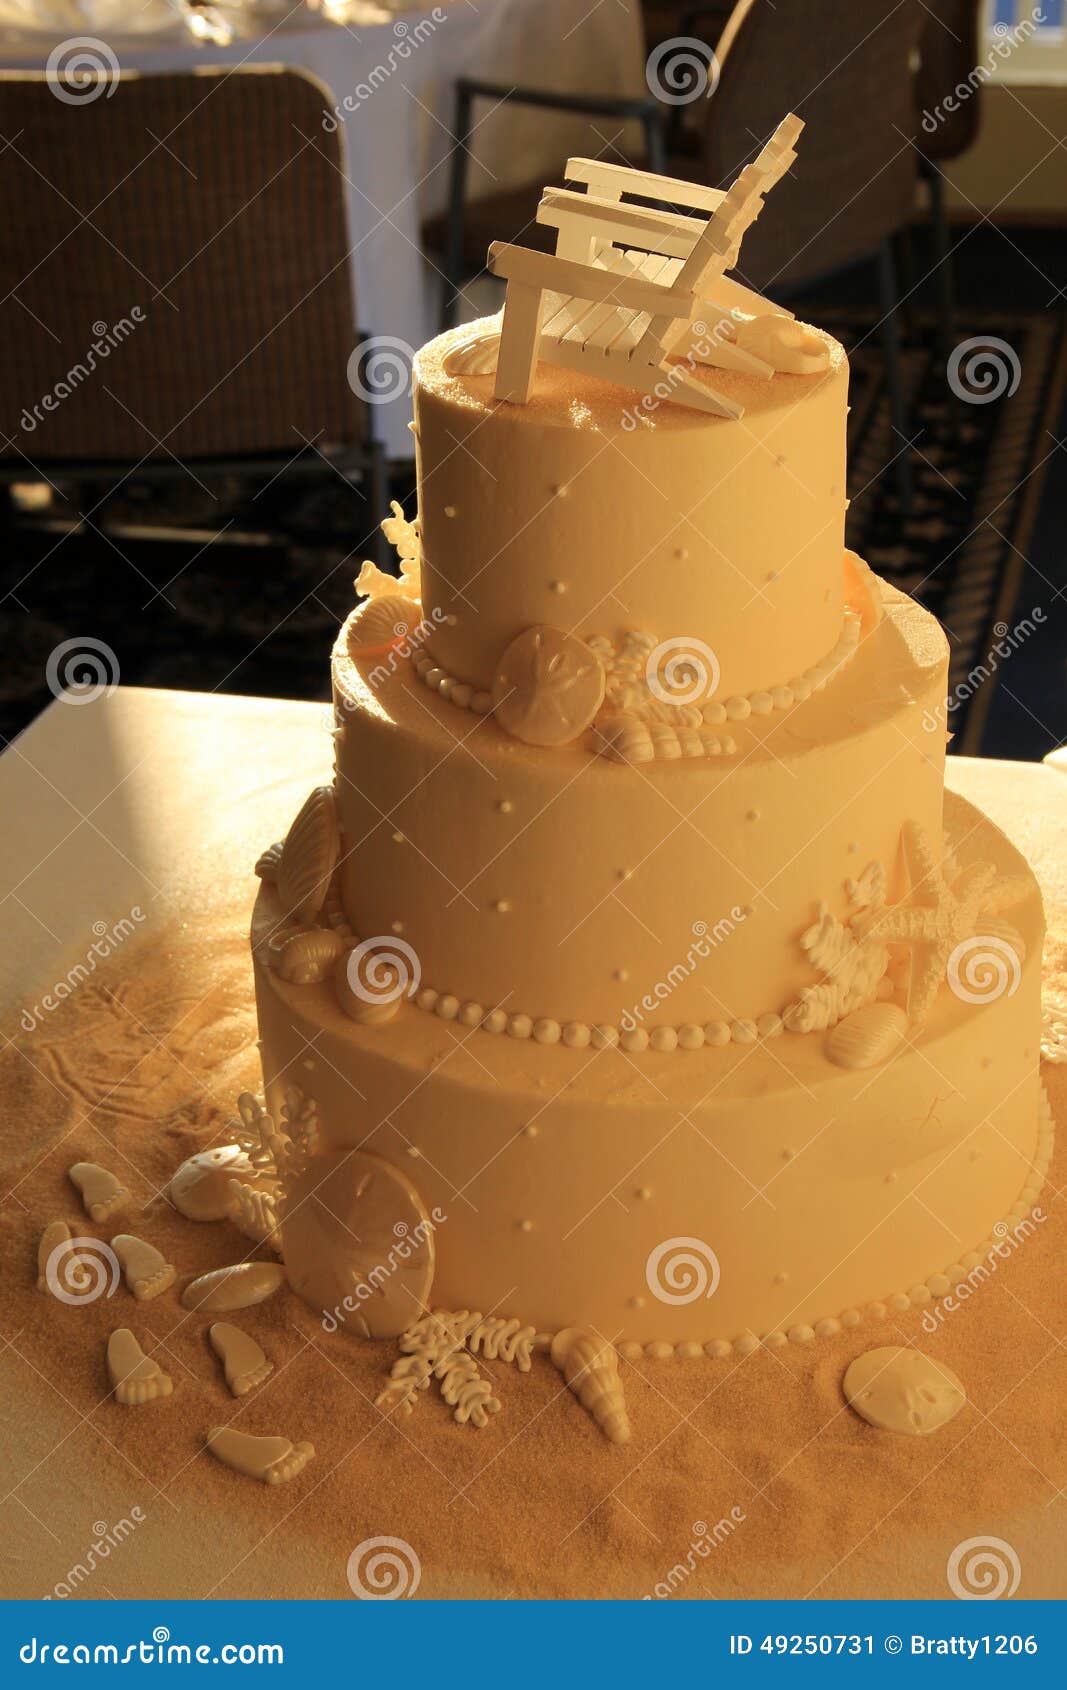 Three Layered Wedding Cake With Beach Theme On Table Stock Image